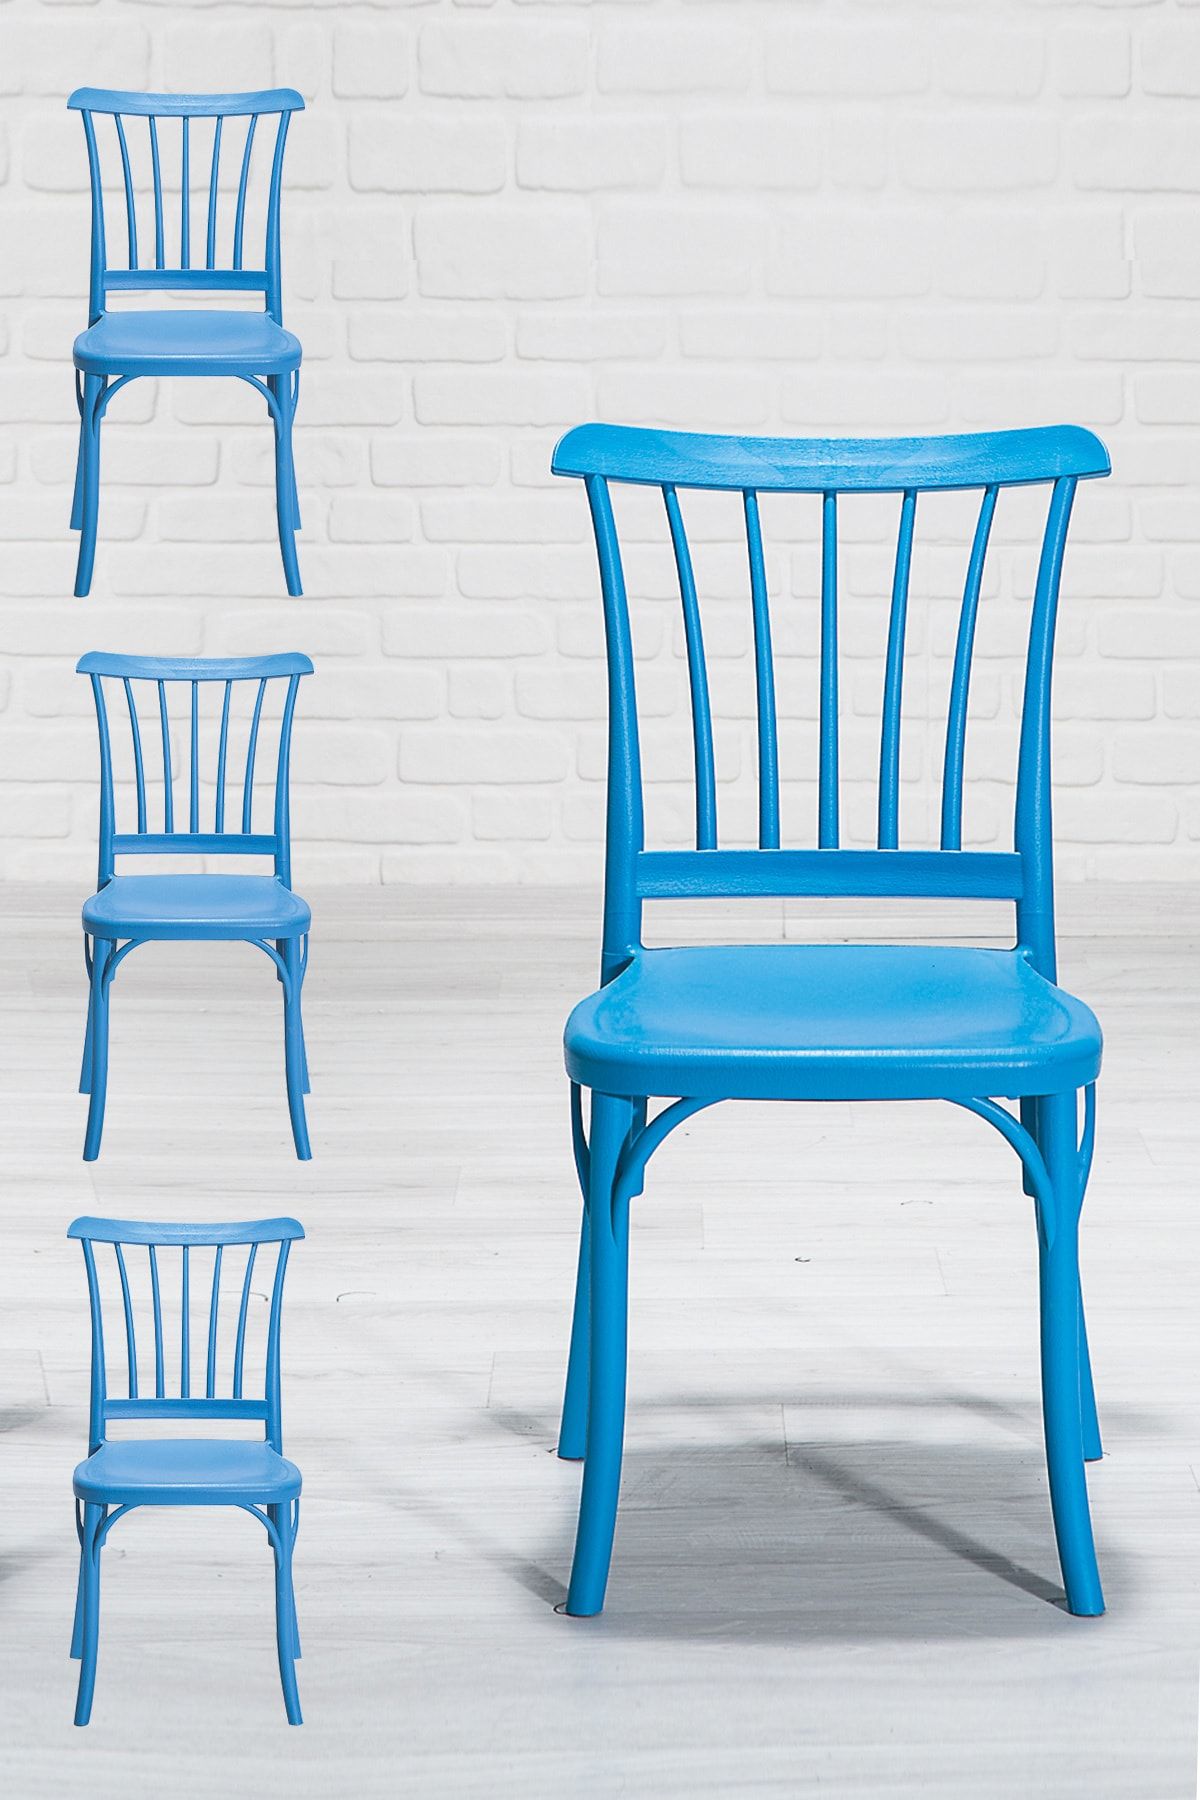 MOBETTO Violet Home Mutfak Sandalyesi 4 Adet – Mavi